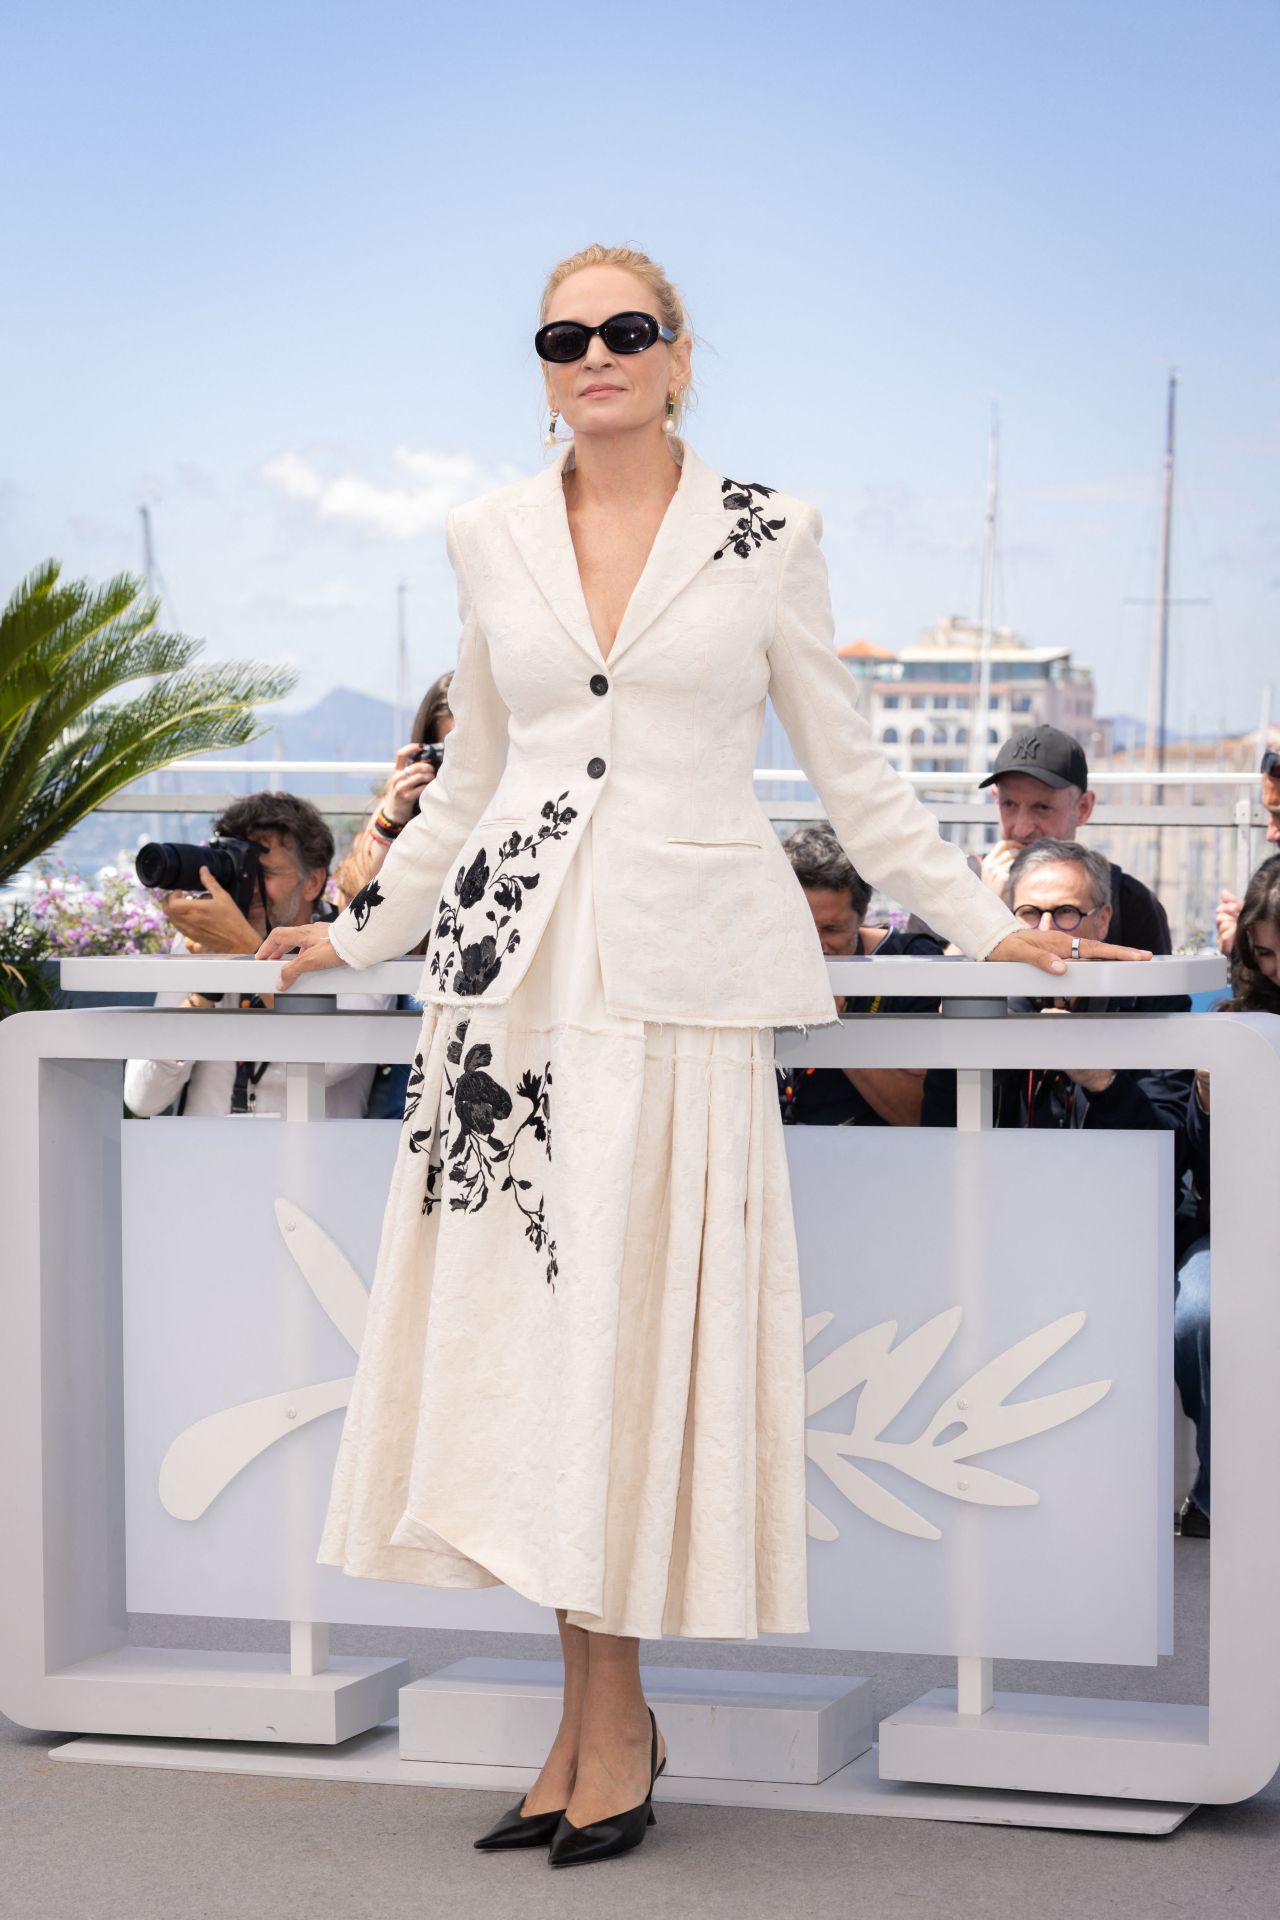 Uma Thurman at Oh Canada Photocall at Cannes Film Festival